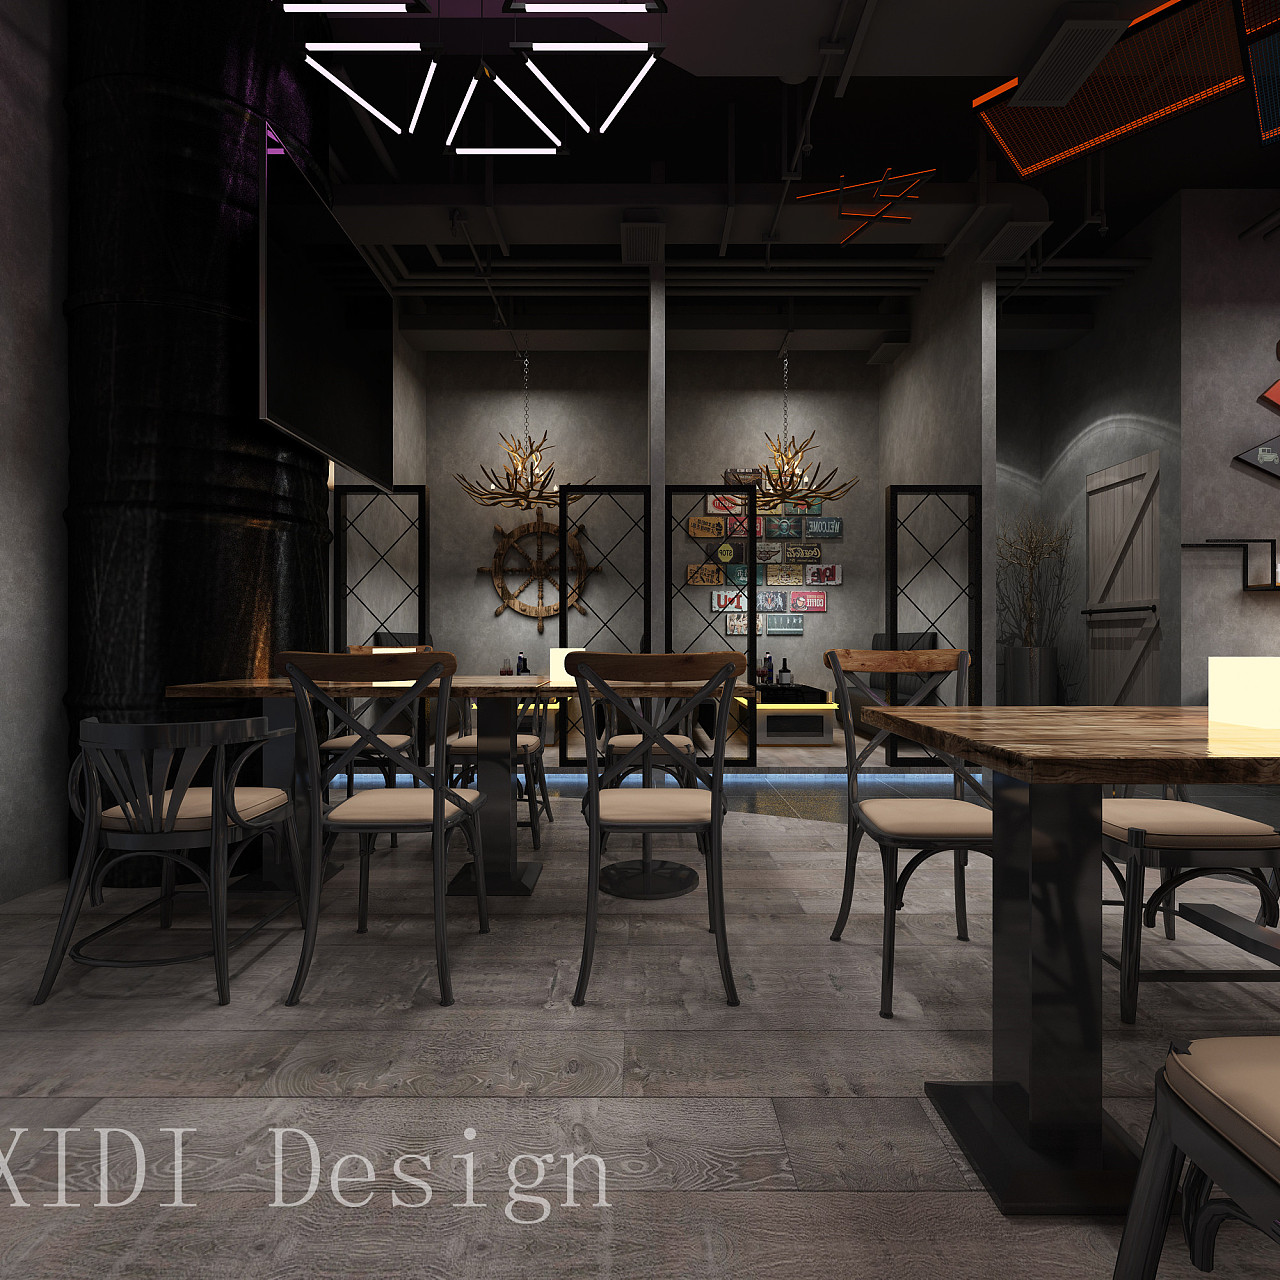 Boroda Bar 美式工业风格酒吧设计 | Ample Design-建E网设计案例